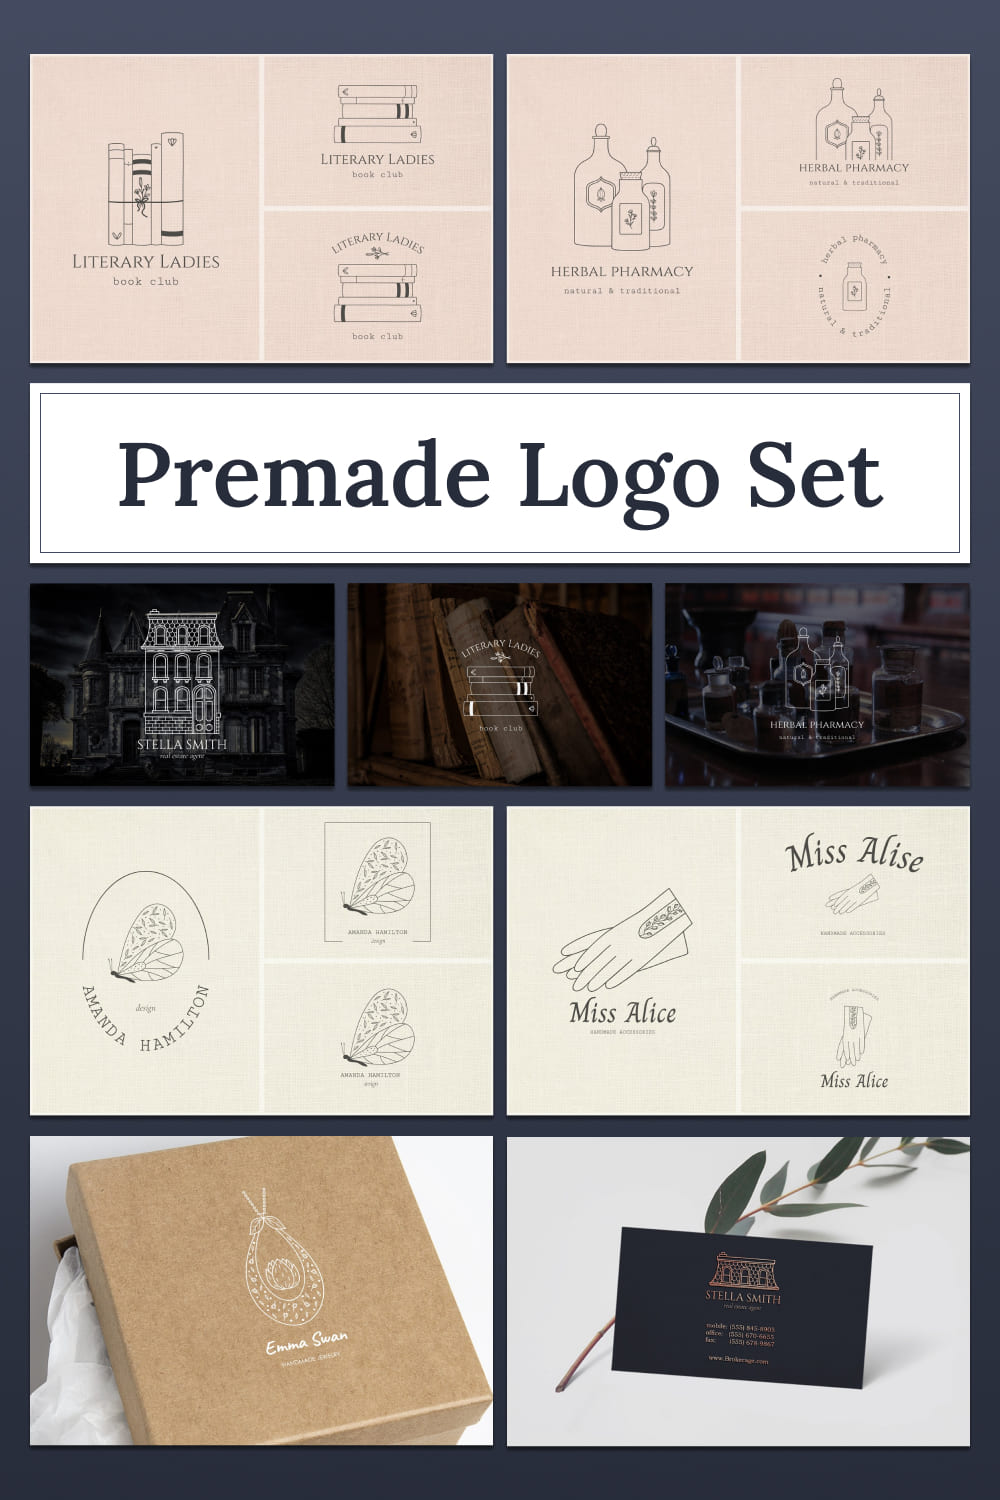 premade logo set for your business.